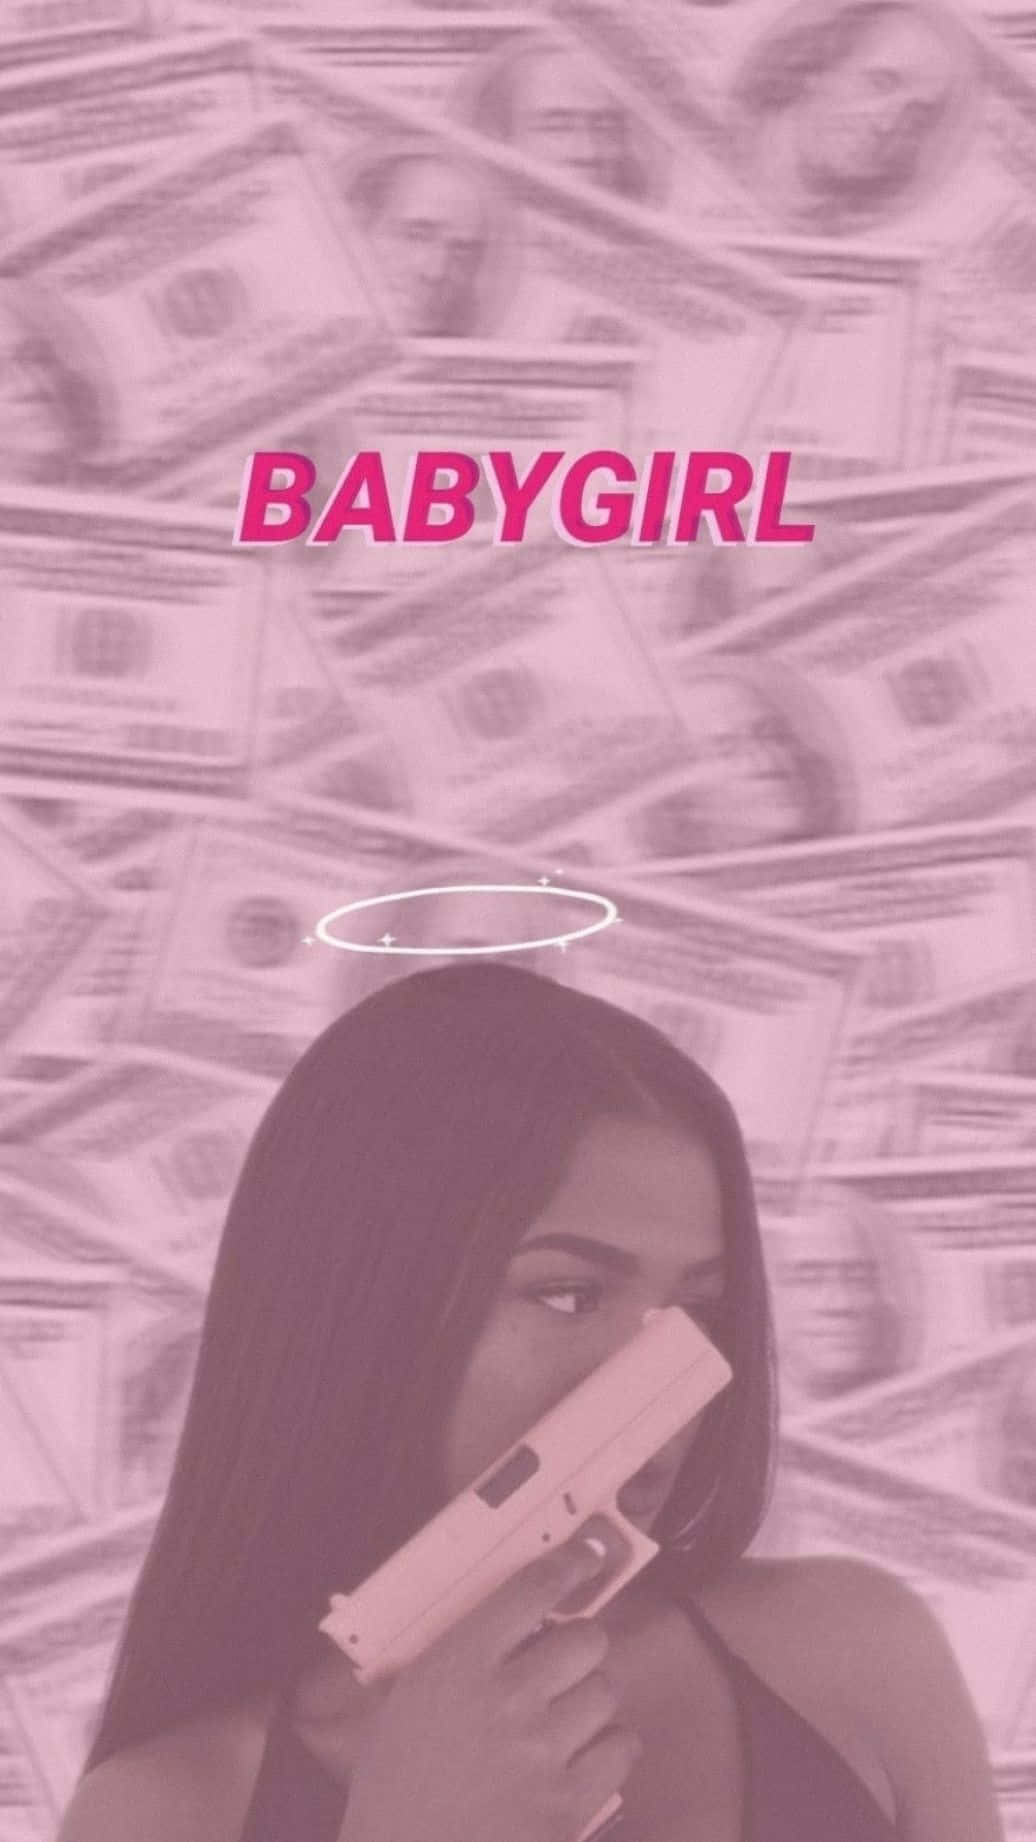 Free Girly Money Wallpaper Downloads, Girly Money Wallpaper for FREE